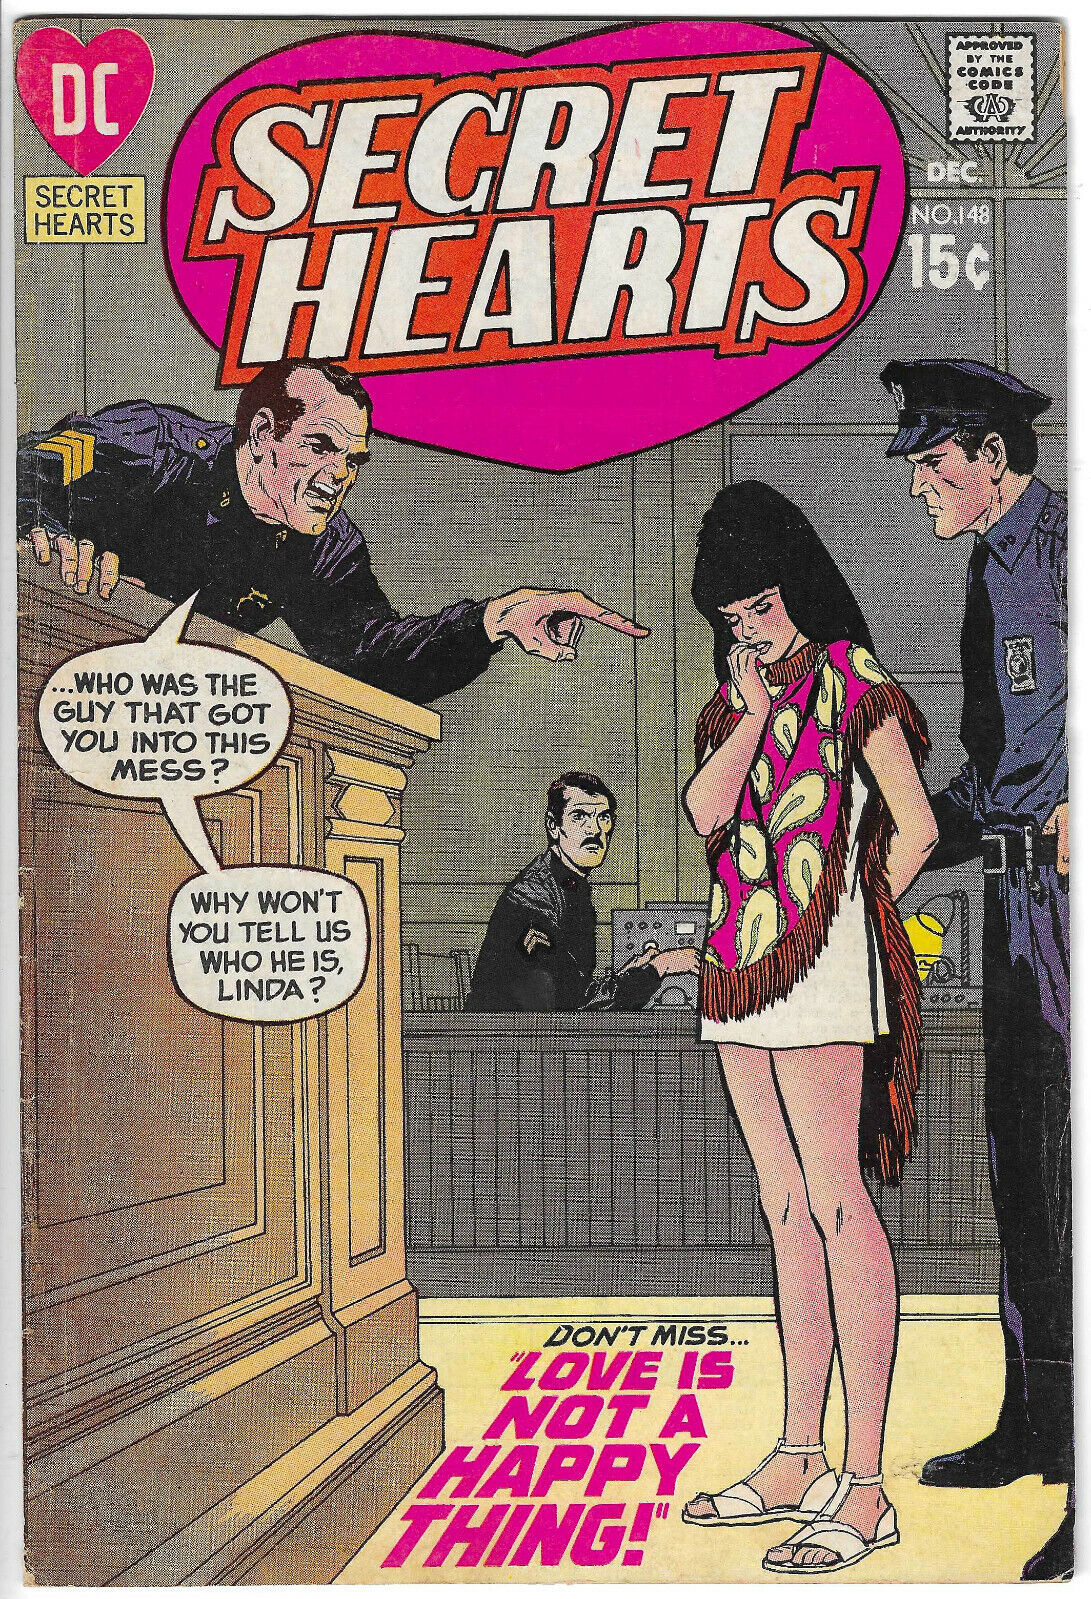 ROMANCE - vintage love comic books lot including 1970 SECRET HEARTS #148 + FREE